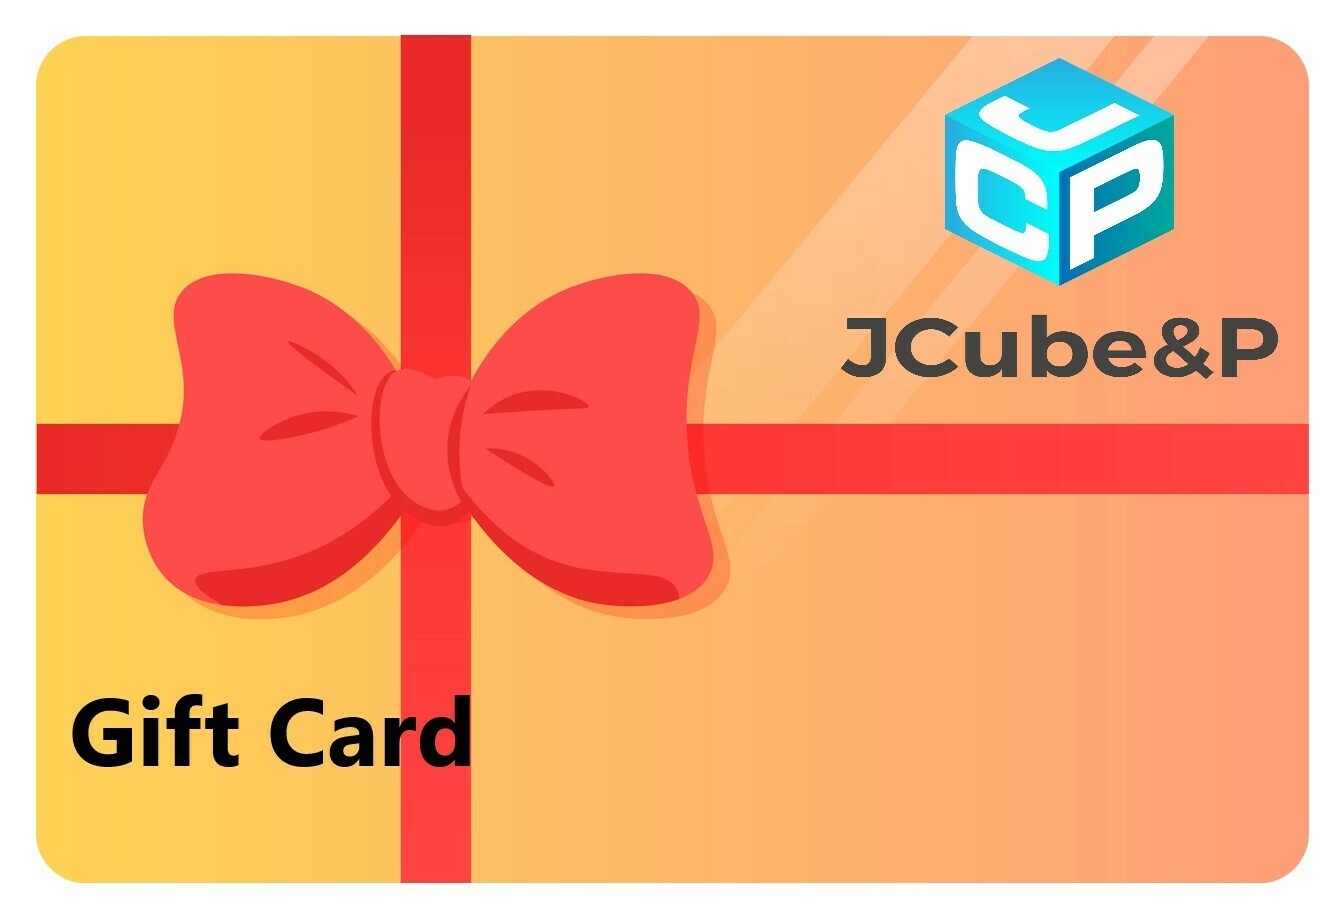 JCube&P Gift card